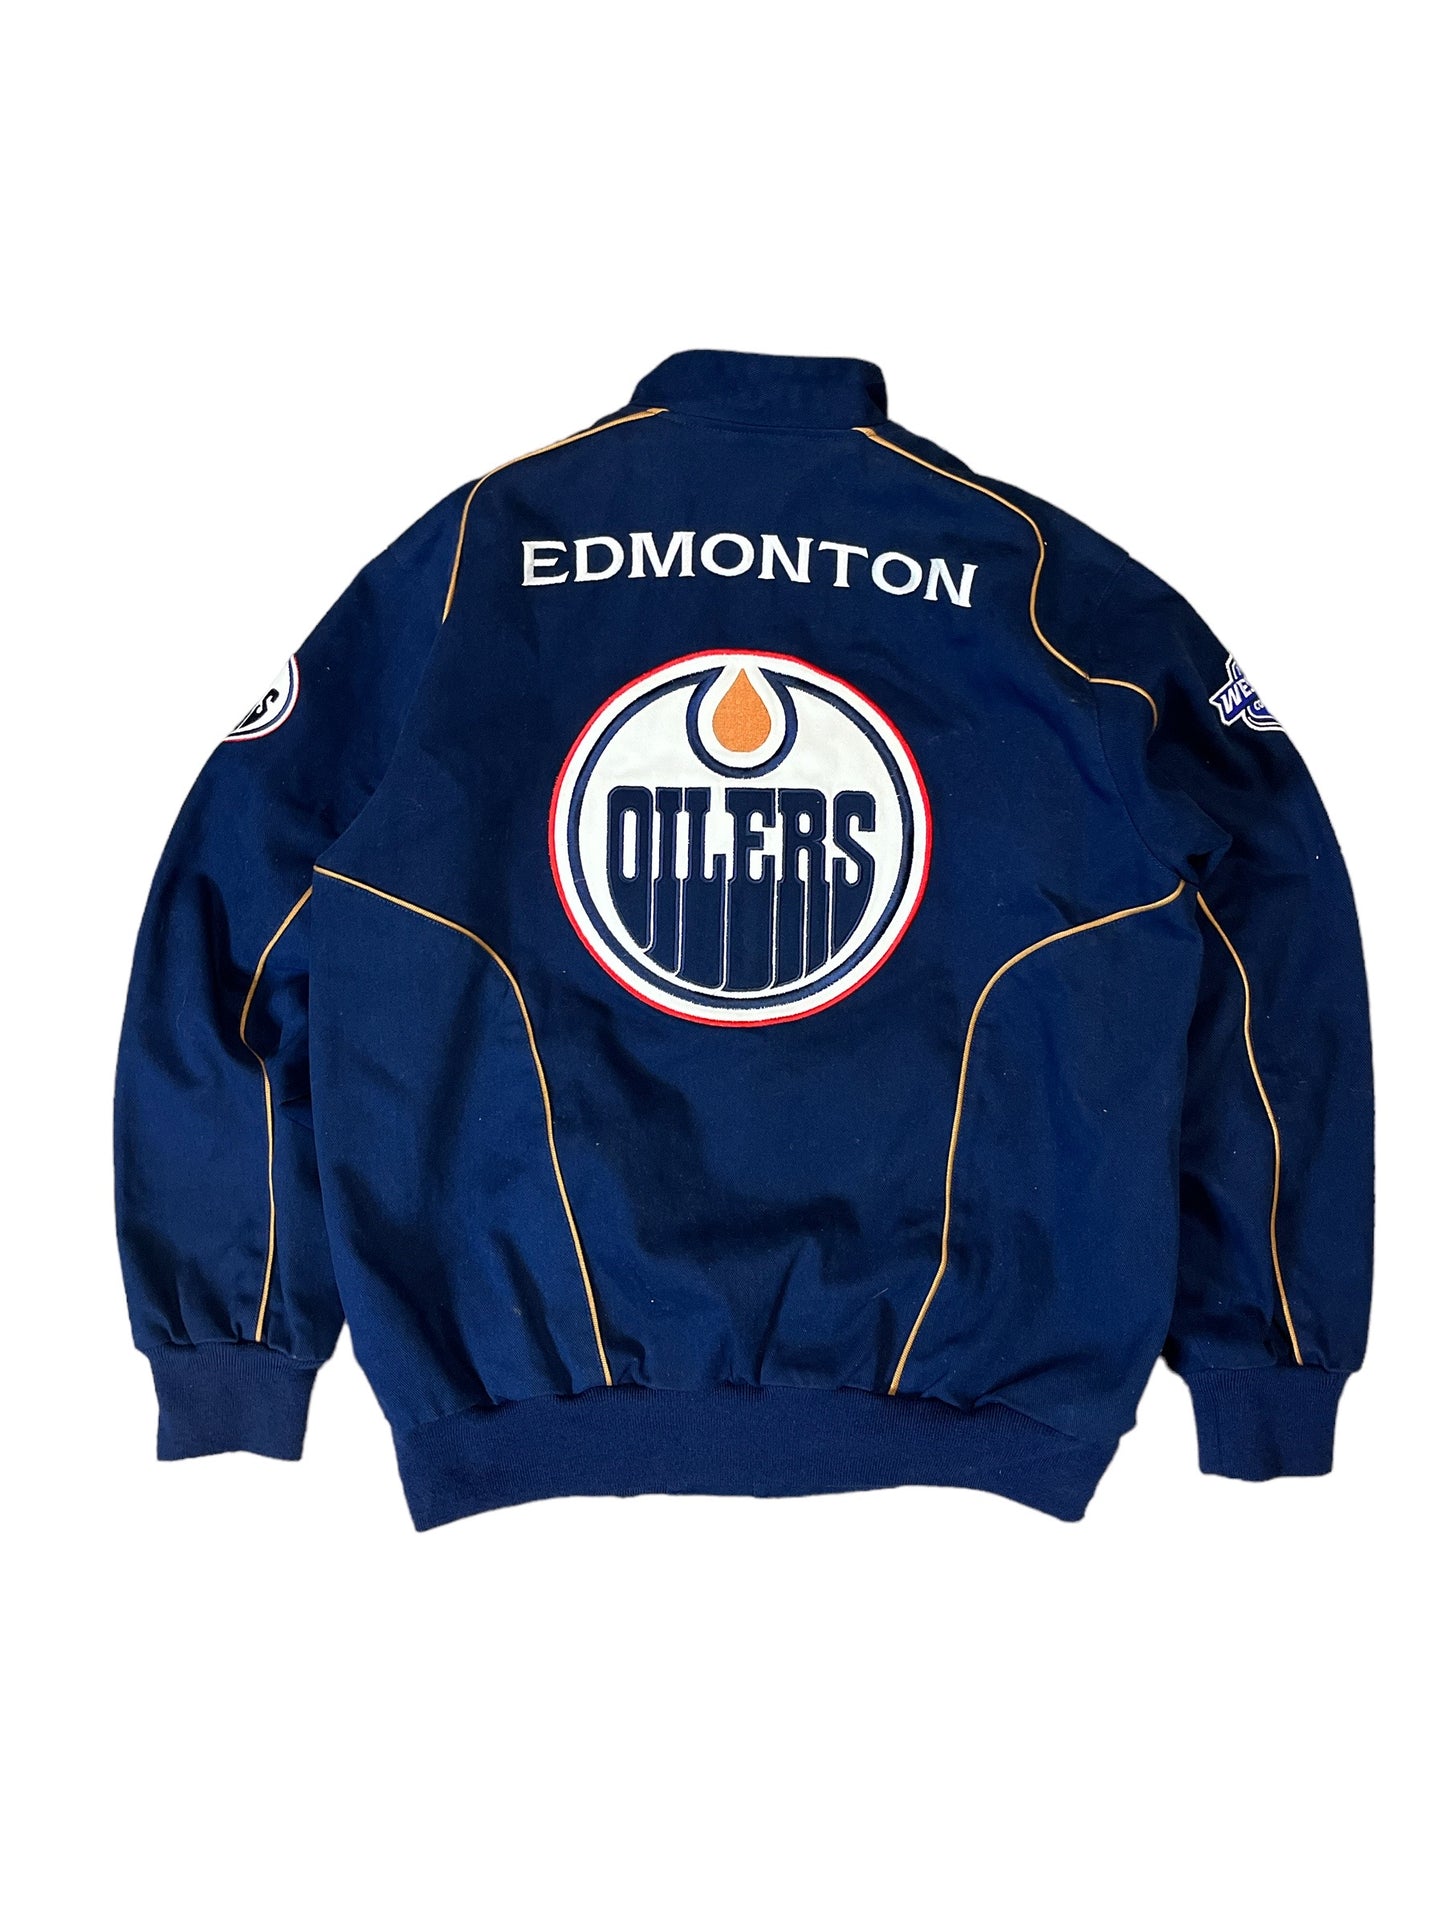 Super Rare NHL G-III Sports Edmonton Oilers Racing Jacket